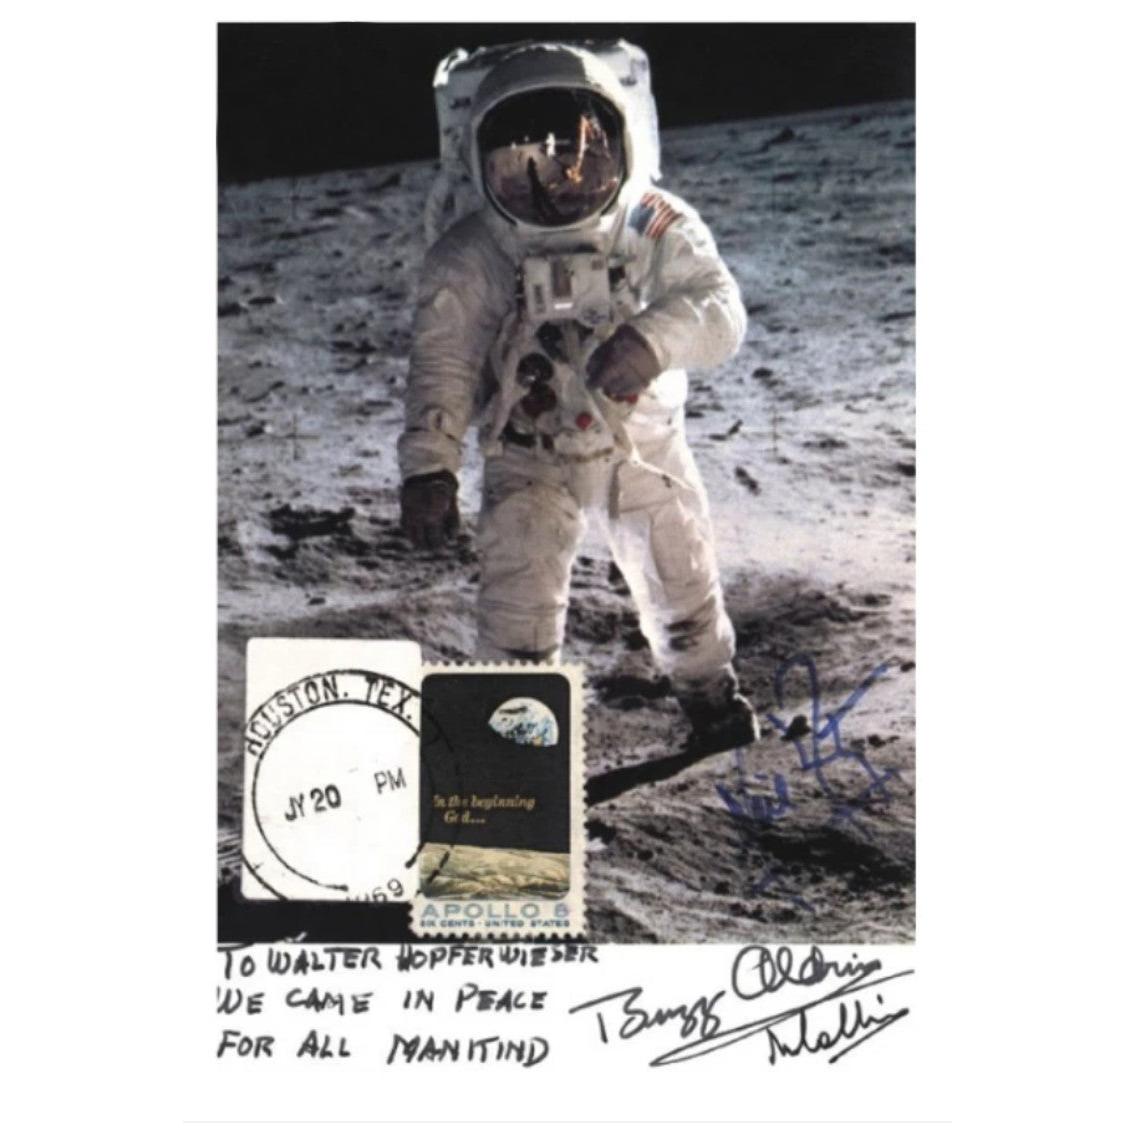 Apollo 11 Signed Photo